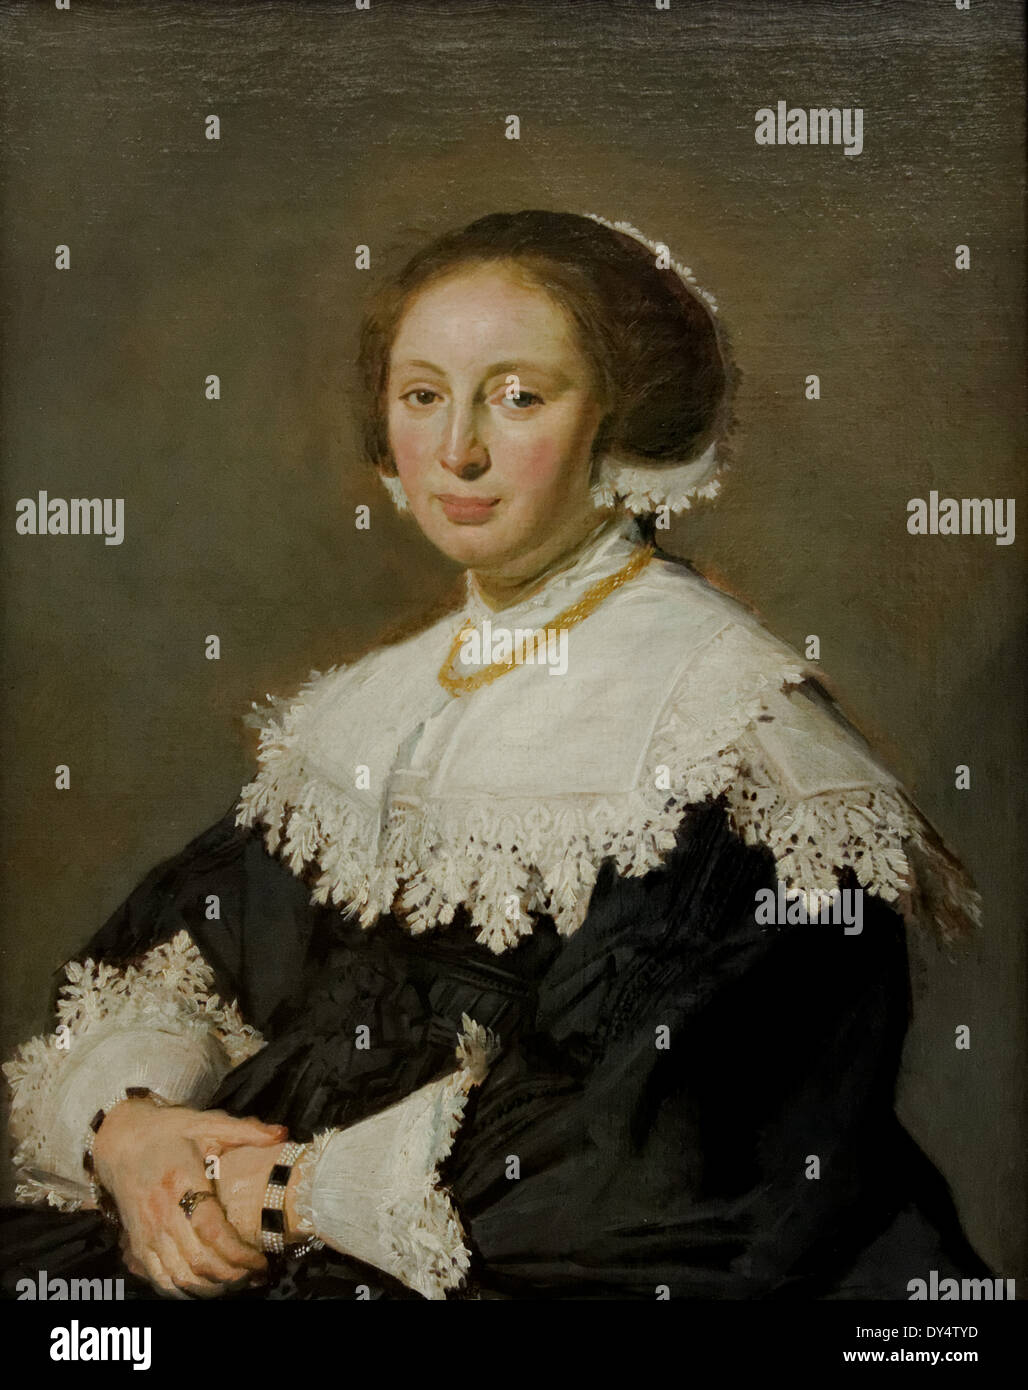 Frans Hals - Portrait of a Woman - 1635 - XVII th Century - Flemish School - Gemäldegalerie - Berlin Stock Photo